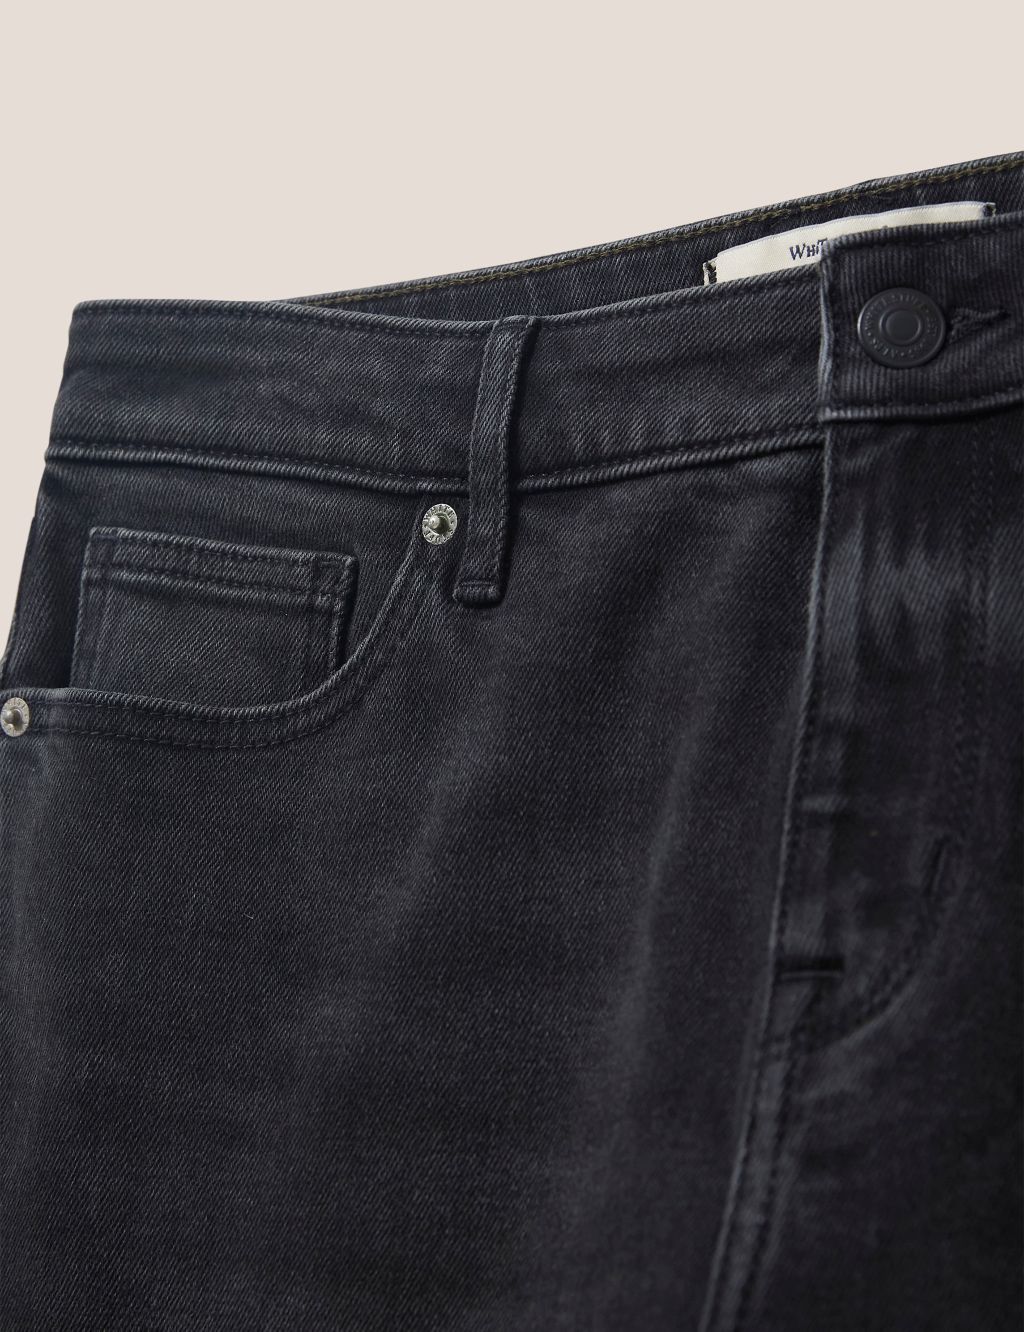 Buy Slim Fit Jeans | White Stuff | M&S